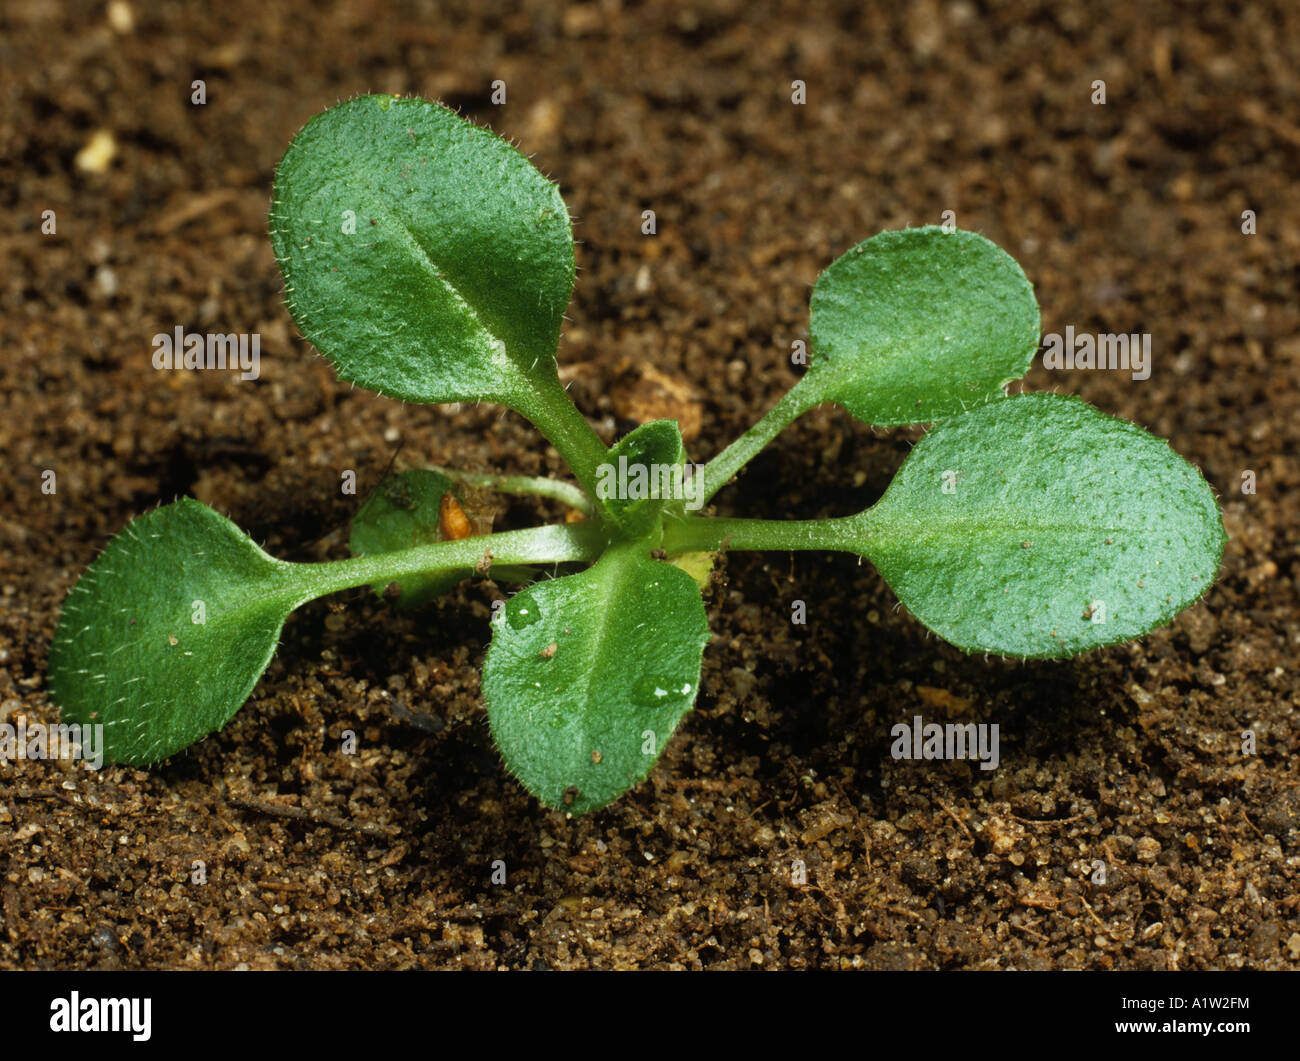 Seedling daisy Bellis perennis against a soil background Stock Photo